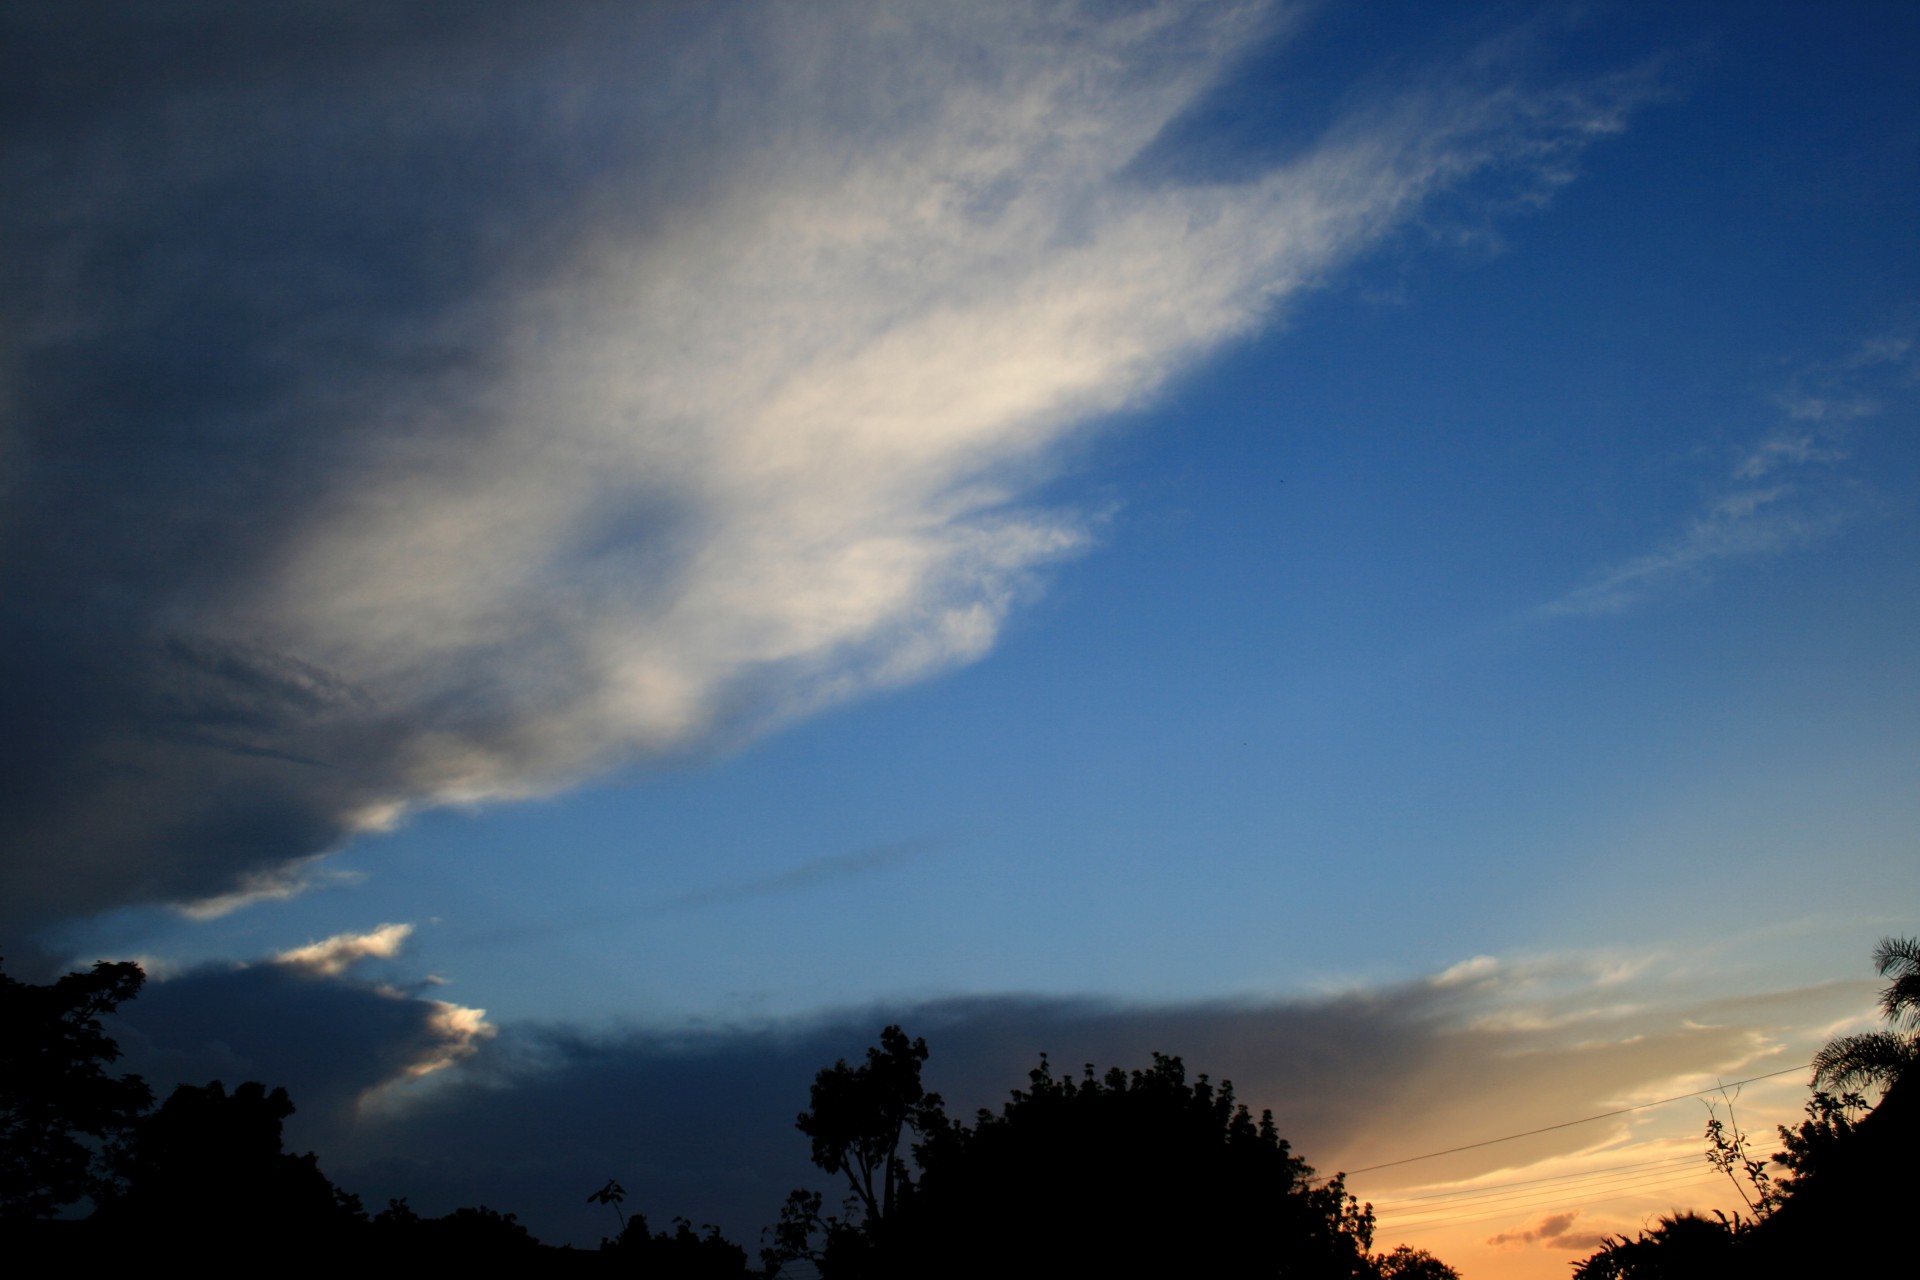 clouds shifting at sunset